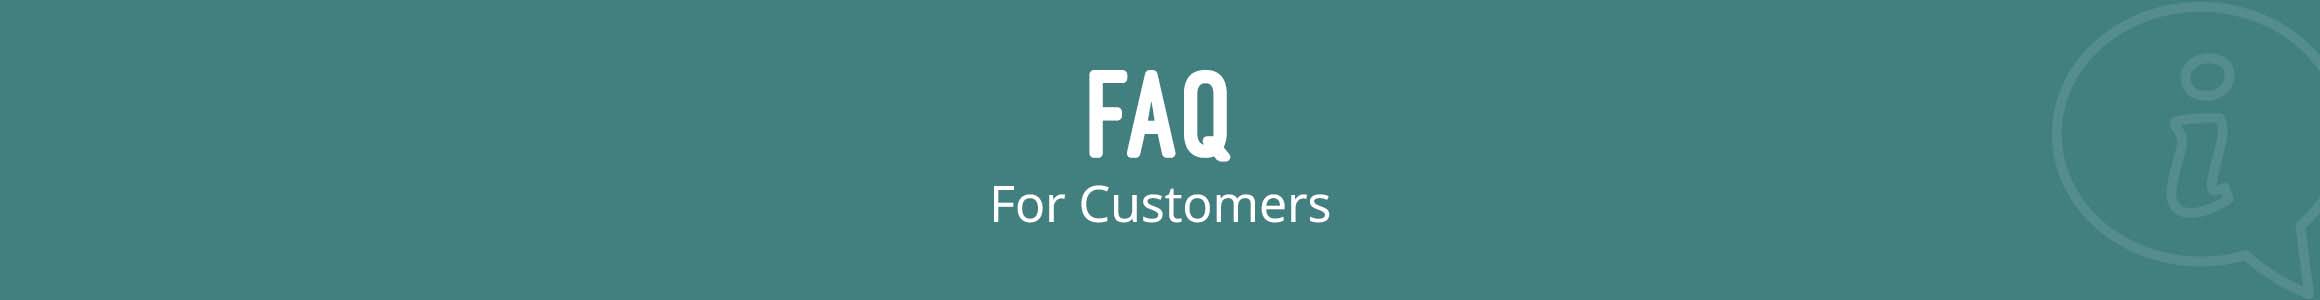 FAQ for Customers